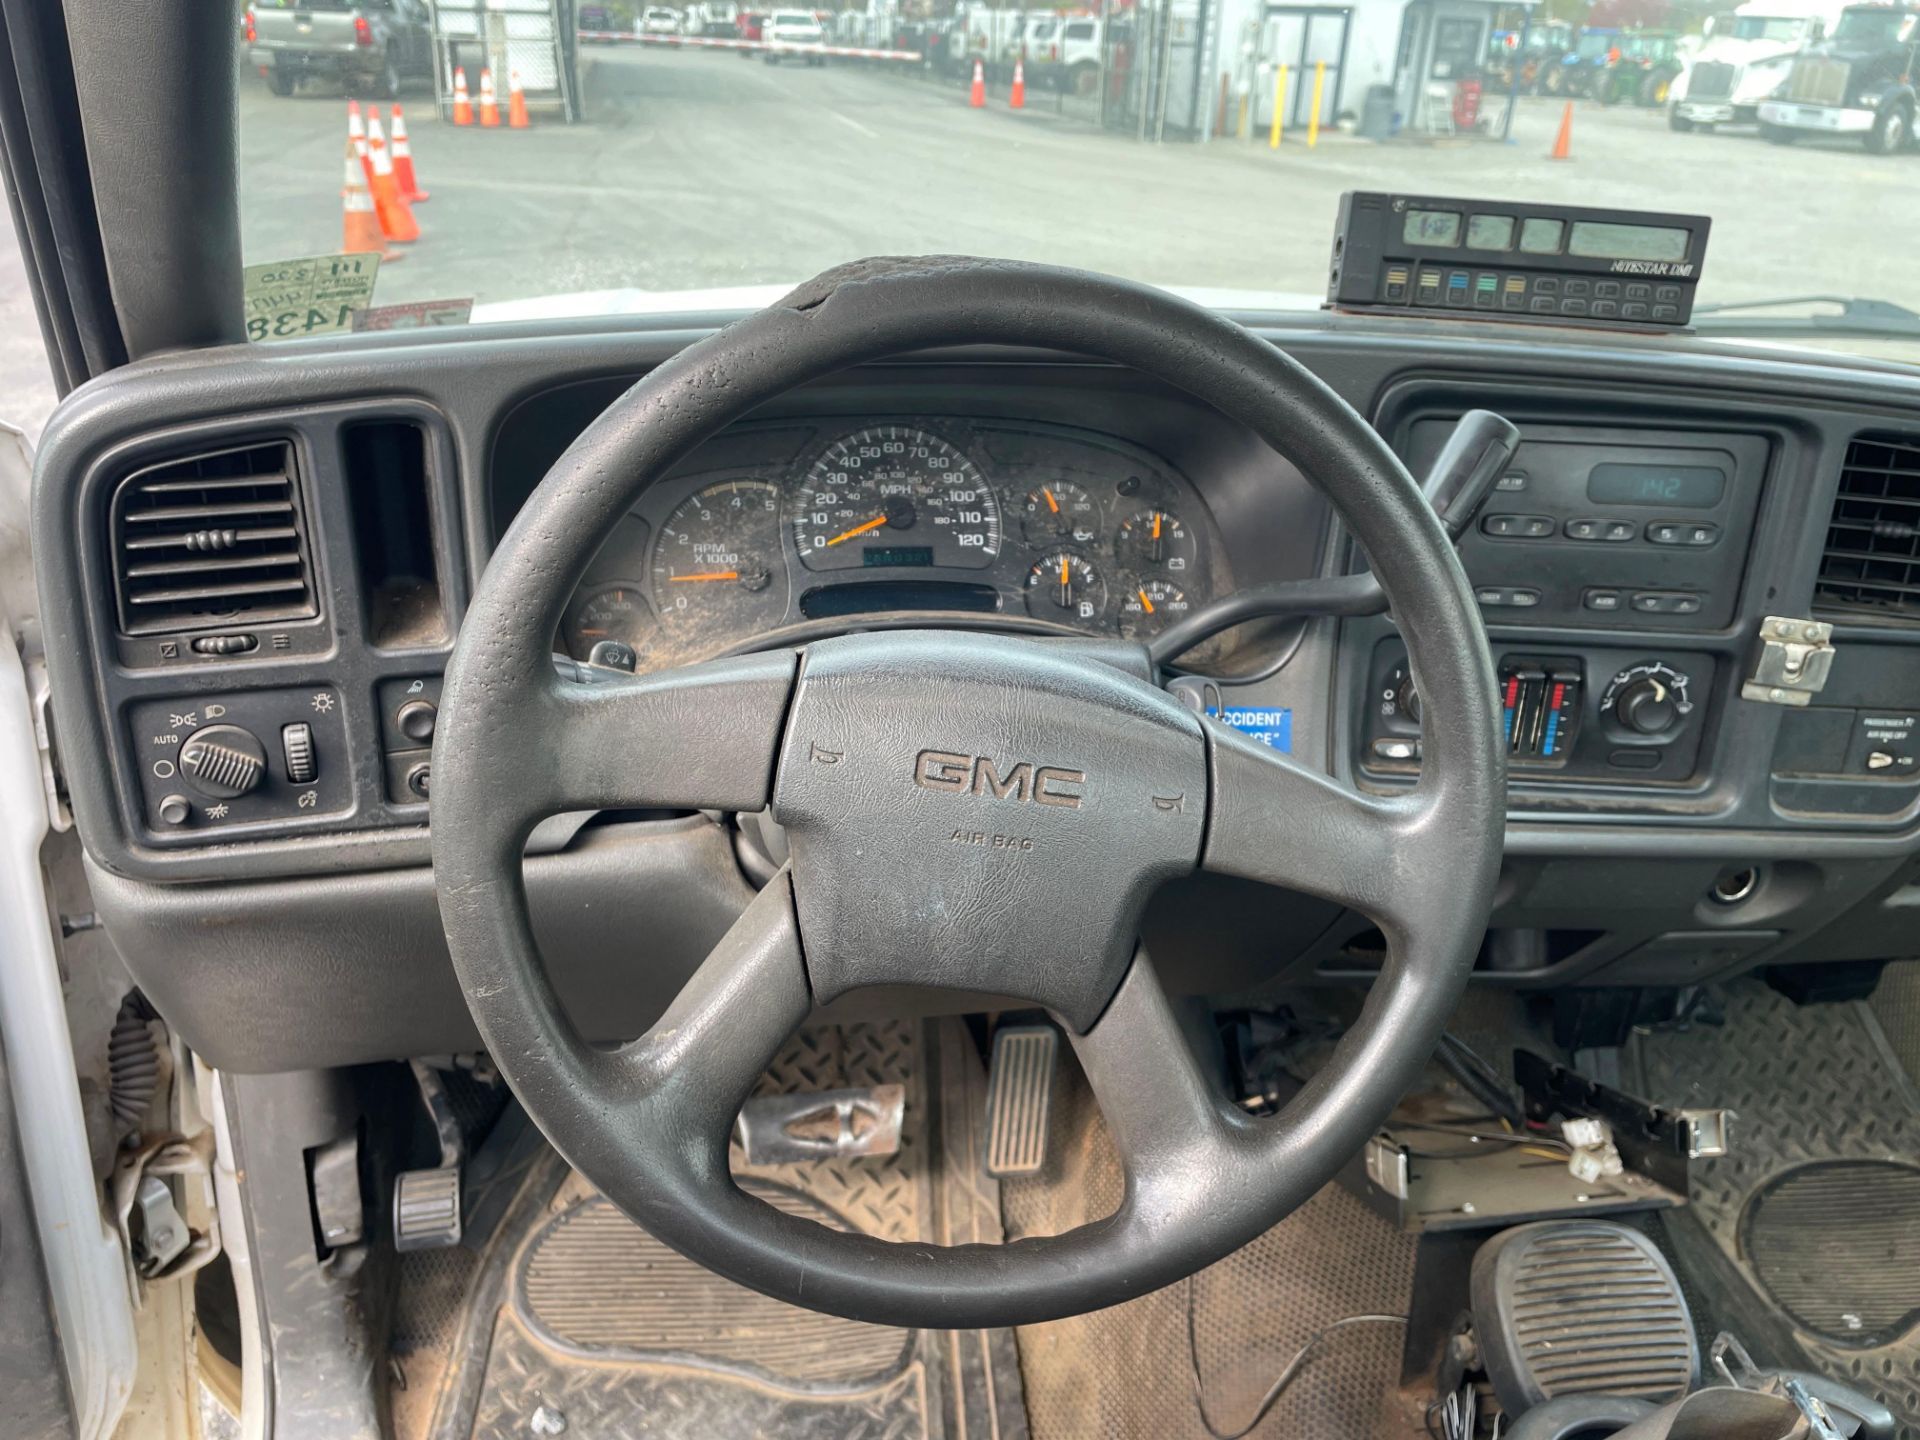 2004 GMC 2500 Pickup Truck - Image 8 of 17